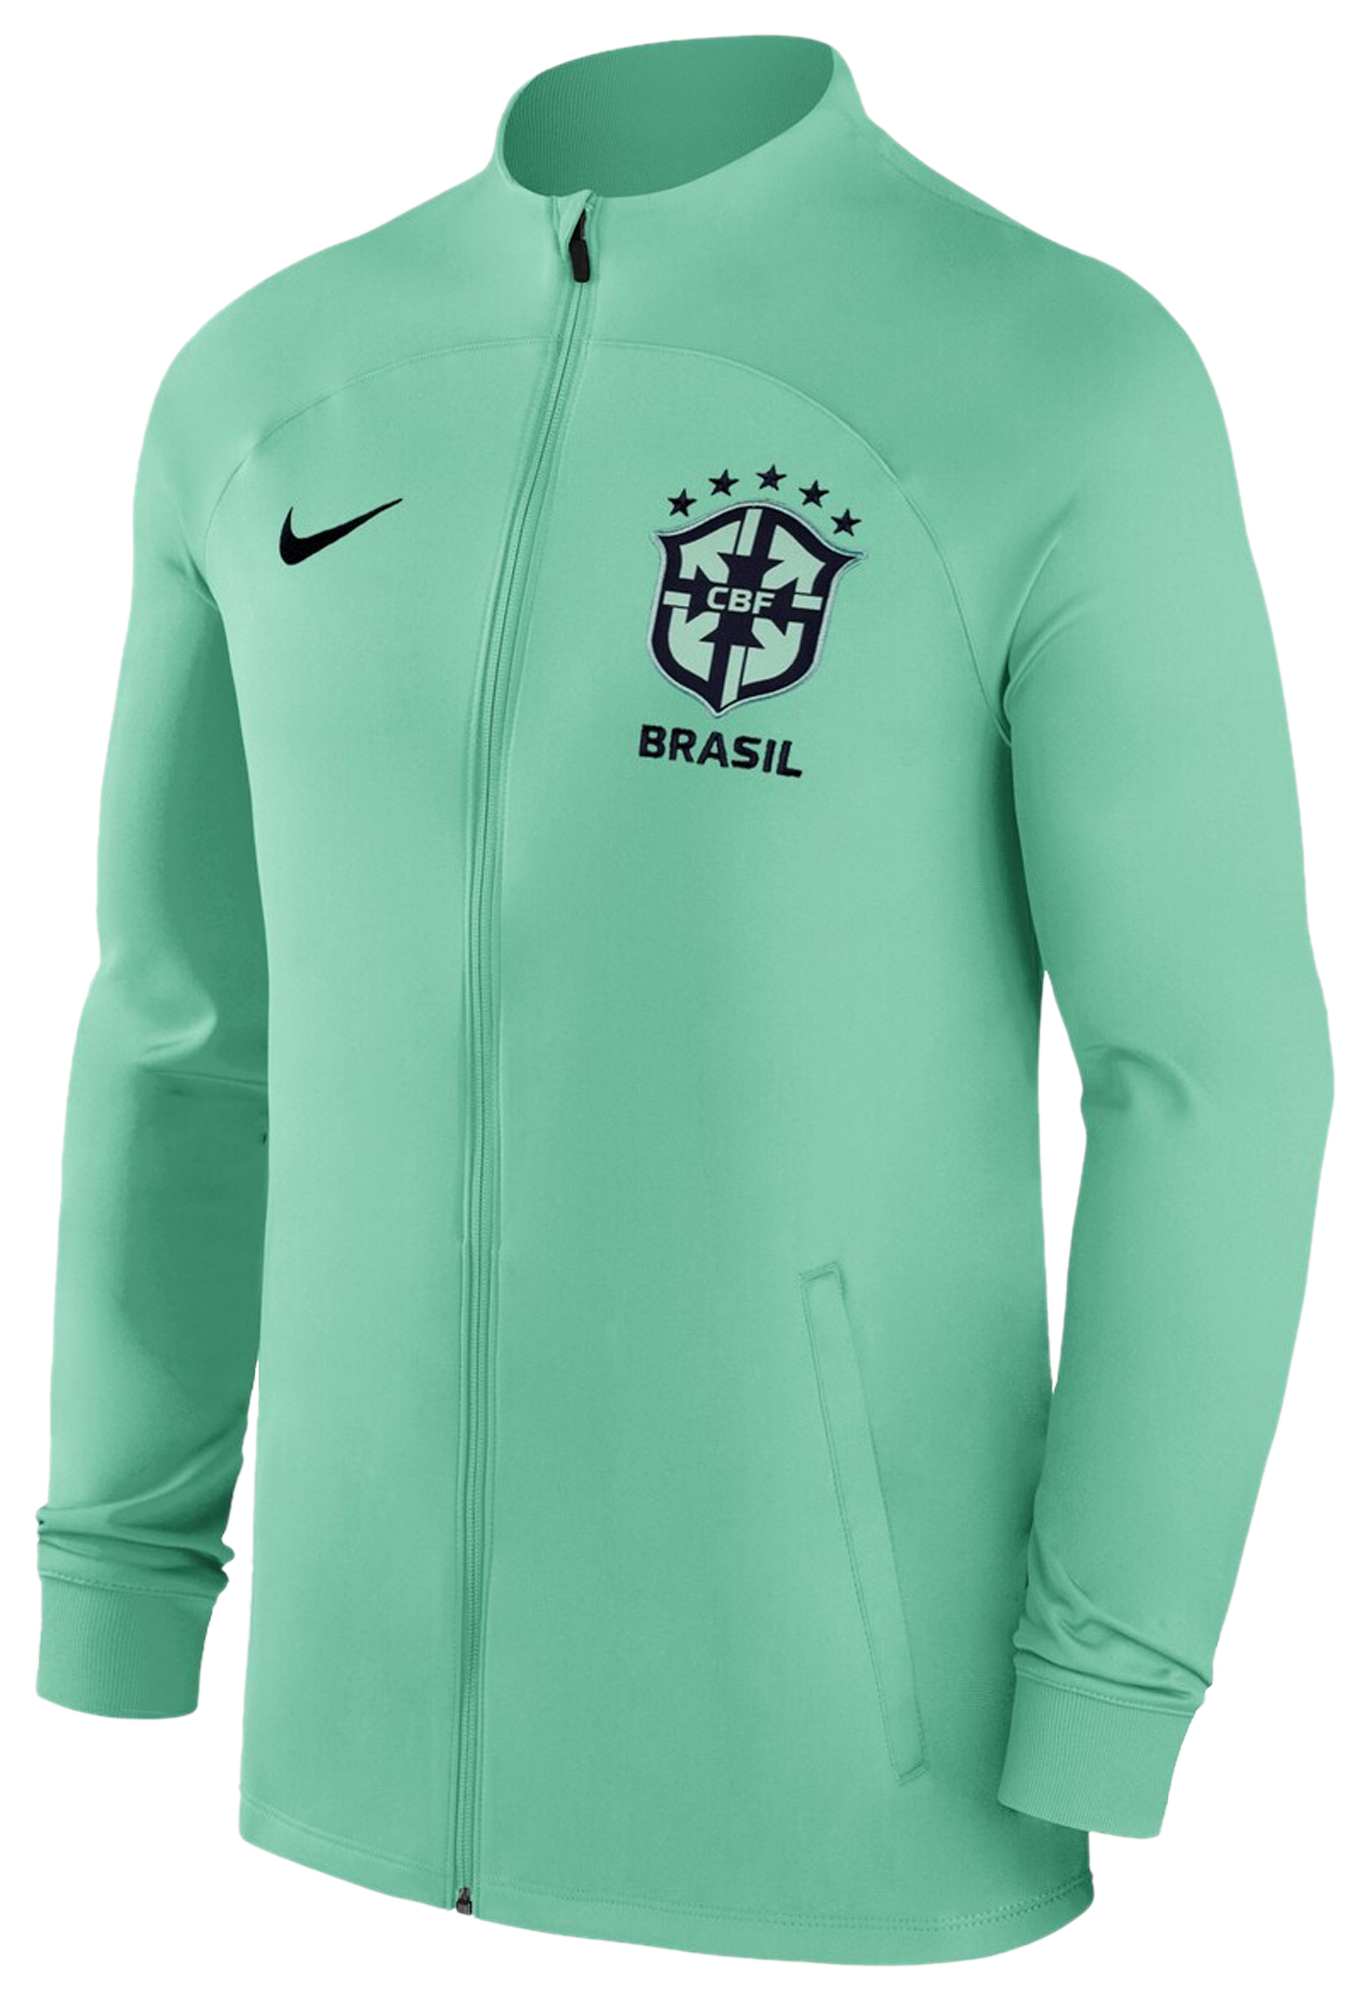 Nike Brasil Soccer Jacket, Full Zip N98 CBF Jacket, 589852, Green Yellow  $100